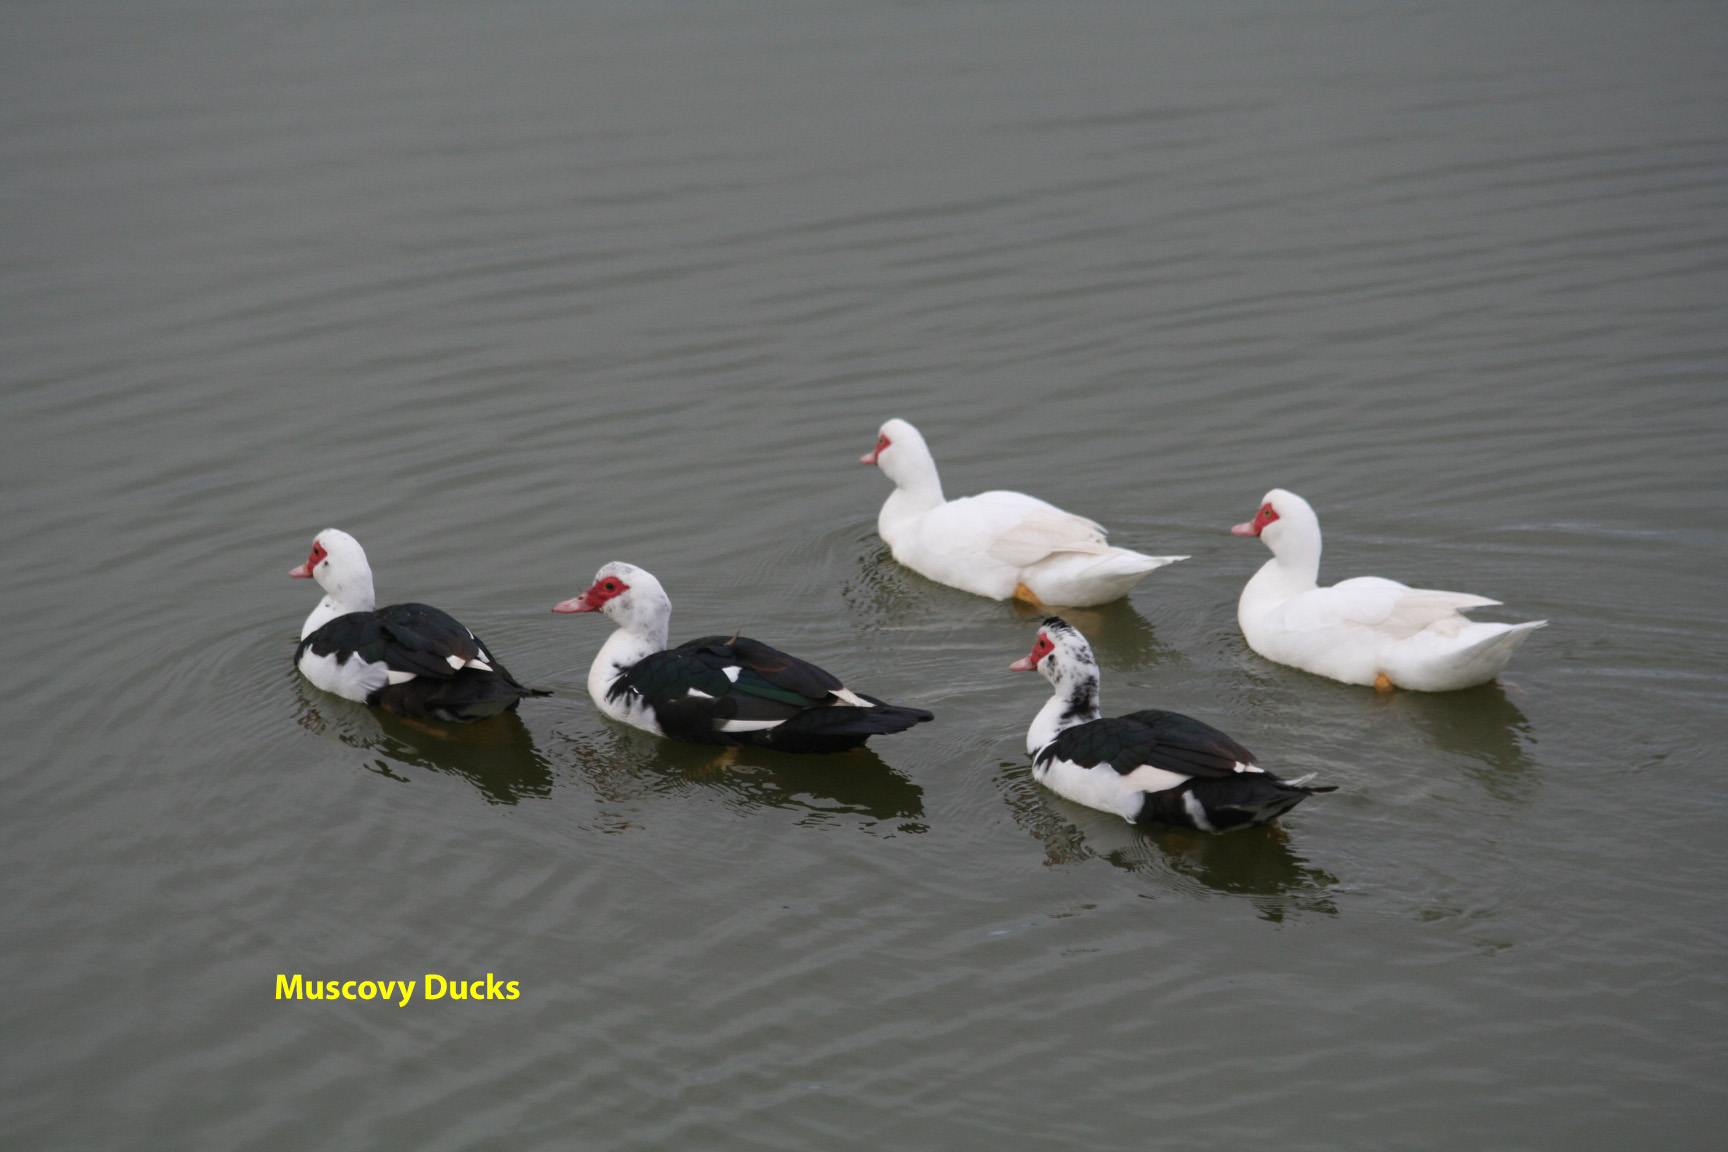 muscovy-ducks-on-fishing-pond-2009-1-a03c1a66d01db0ed75b7c73cbad706a8185085e3